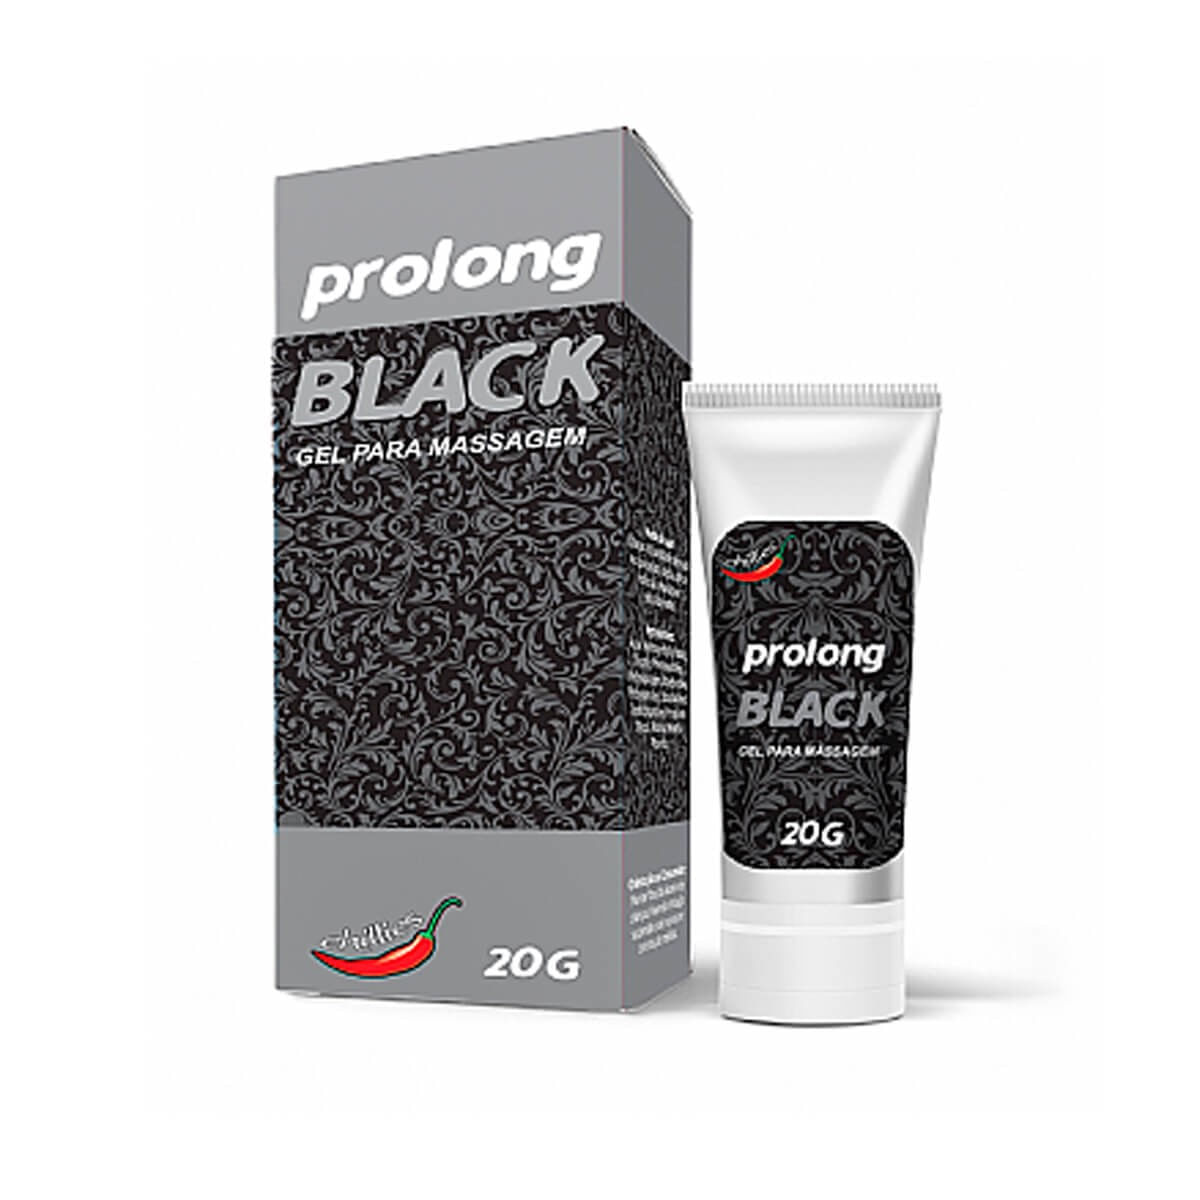 Prolong Black 20g Chillies